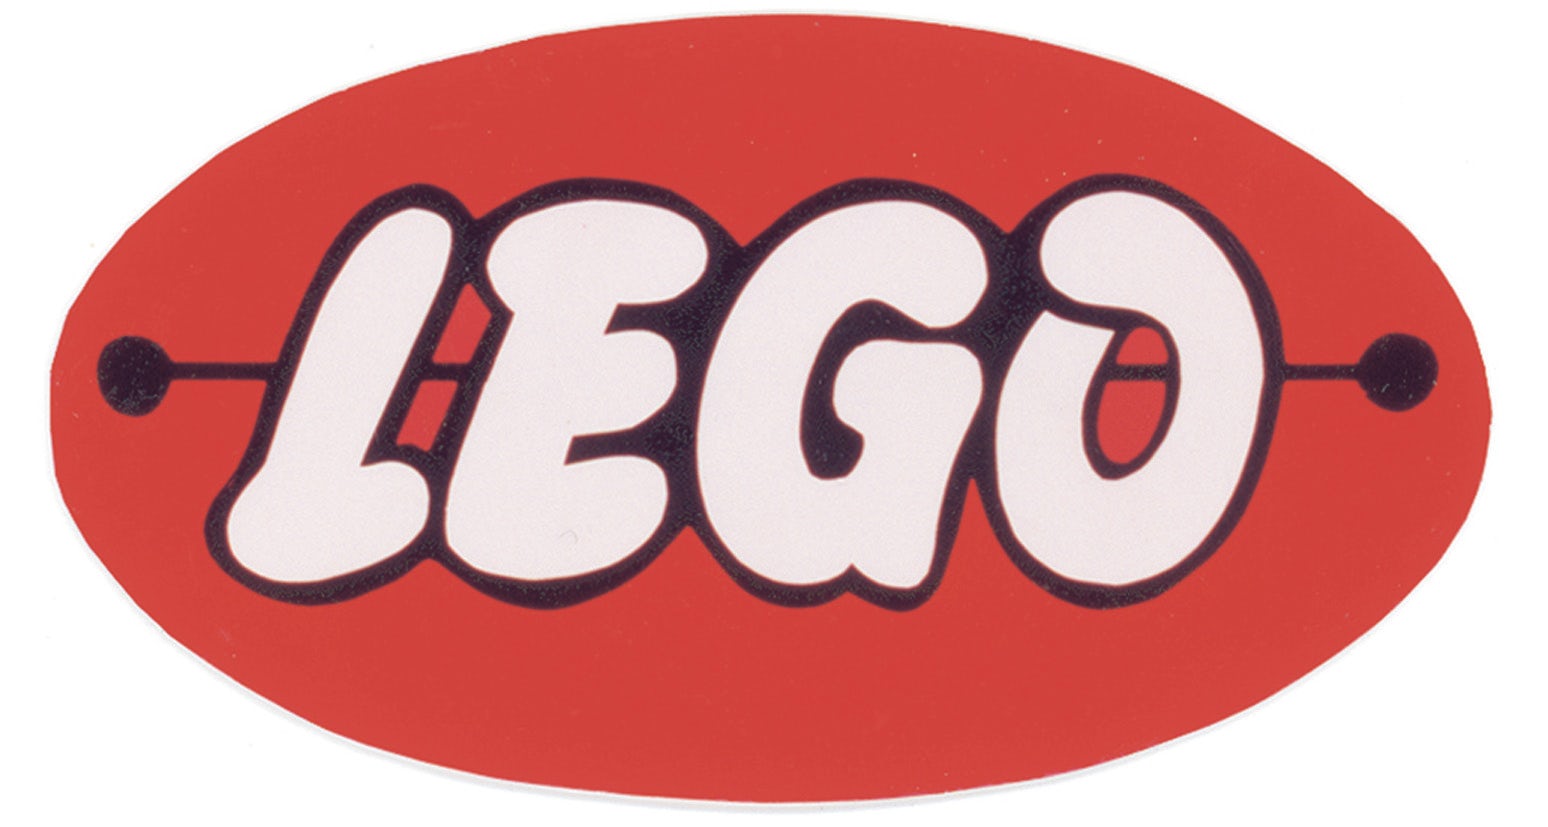 Lego logo 1953